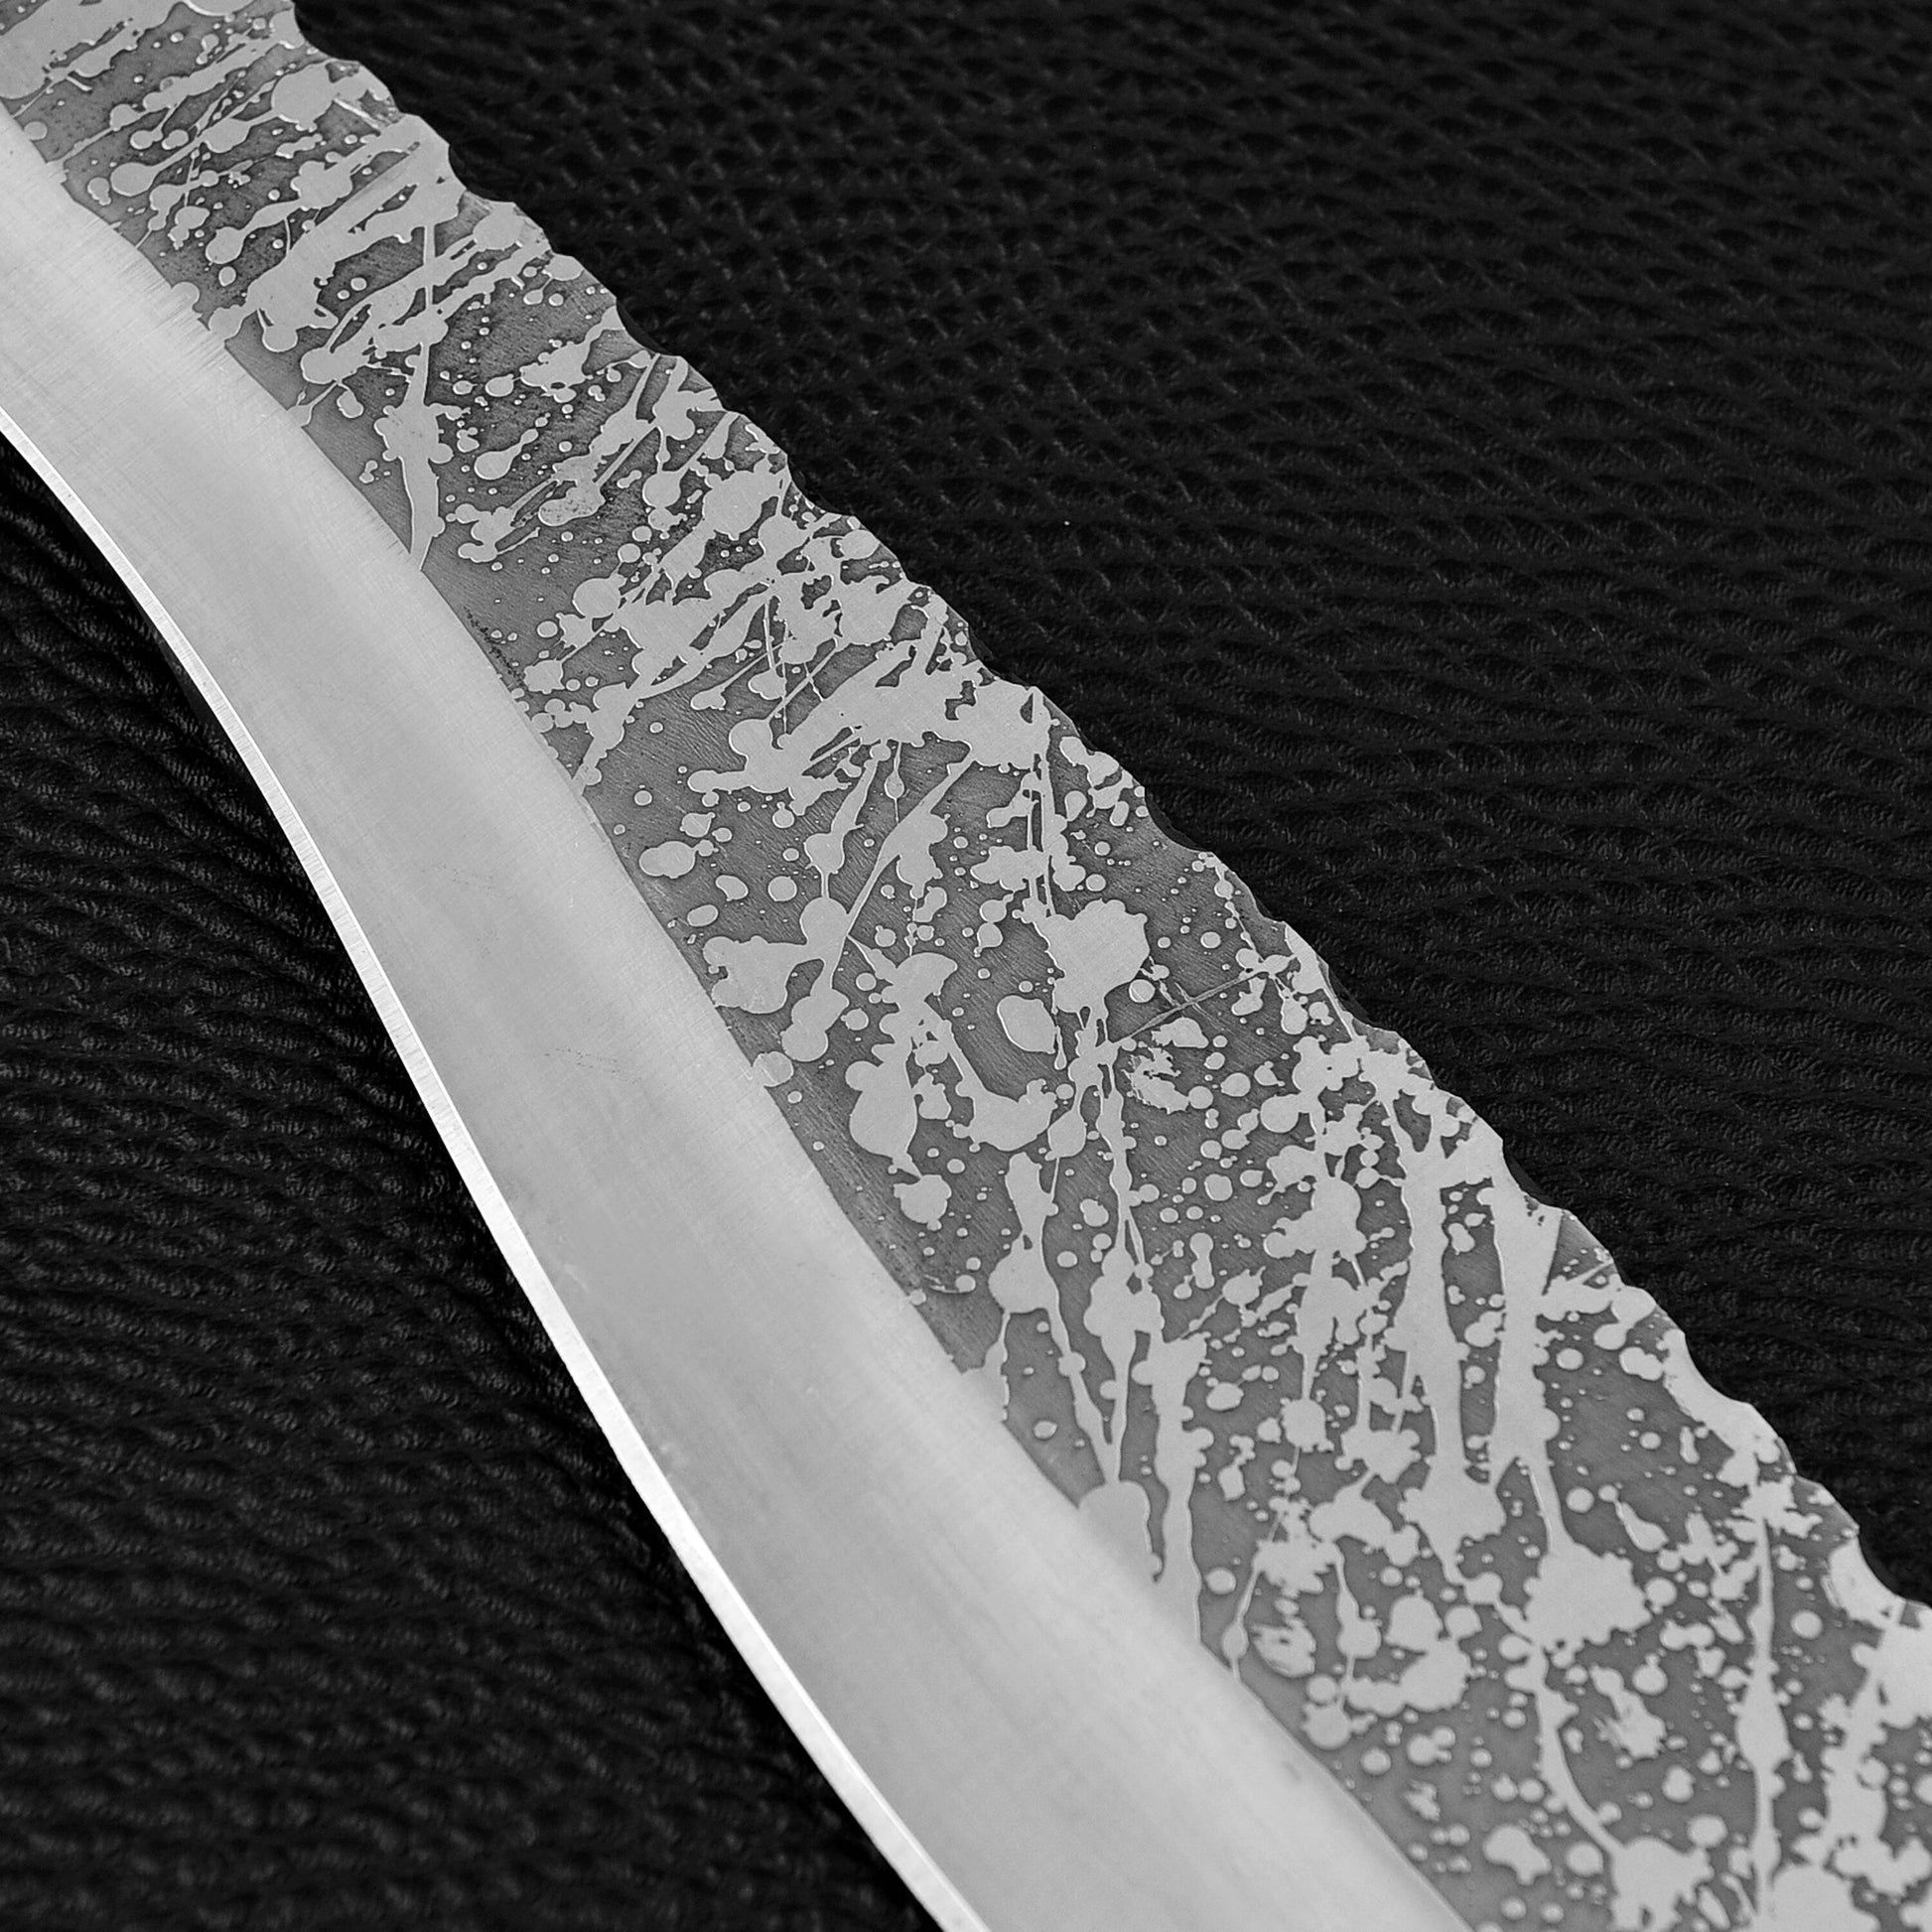 19" Kopis Sword - High Carbon Steel Knife Ancient Greek Forward-Curving Fixed Blade Massive Hunting Knife Handmade Knife Gift For Him